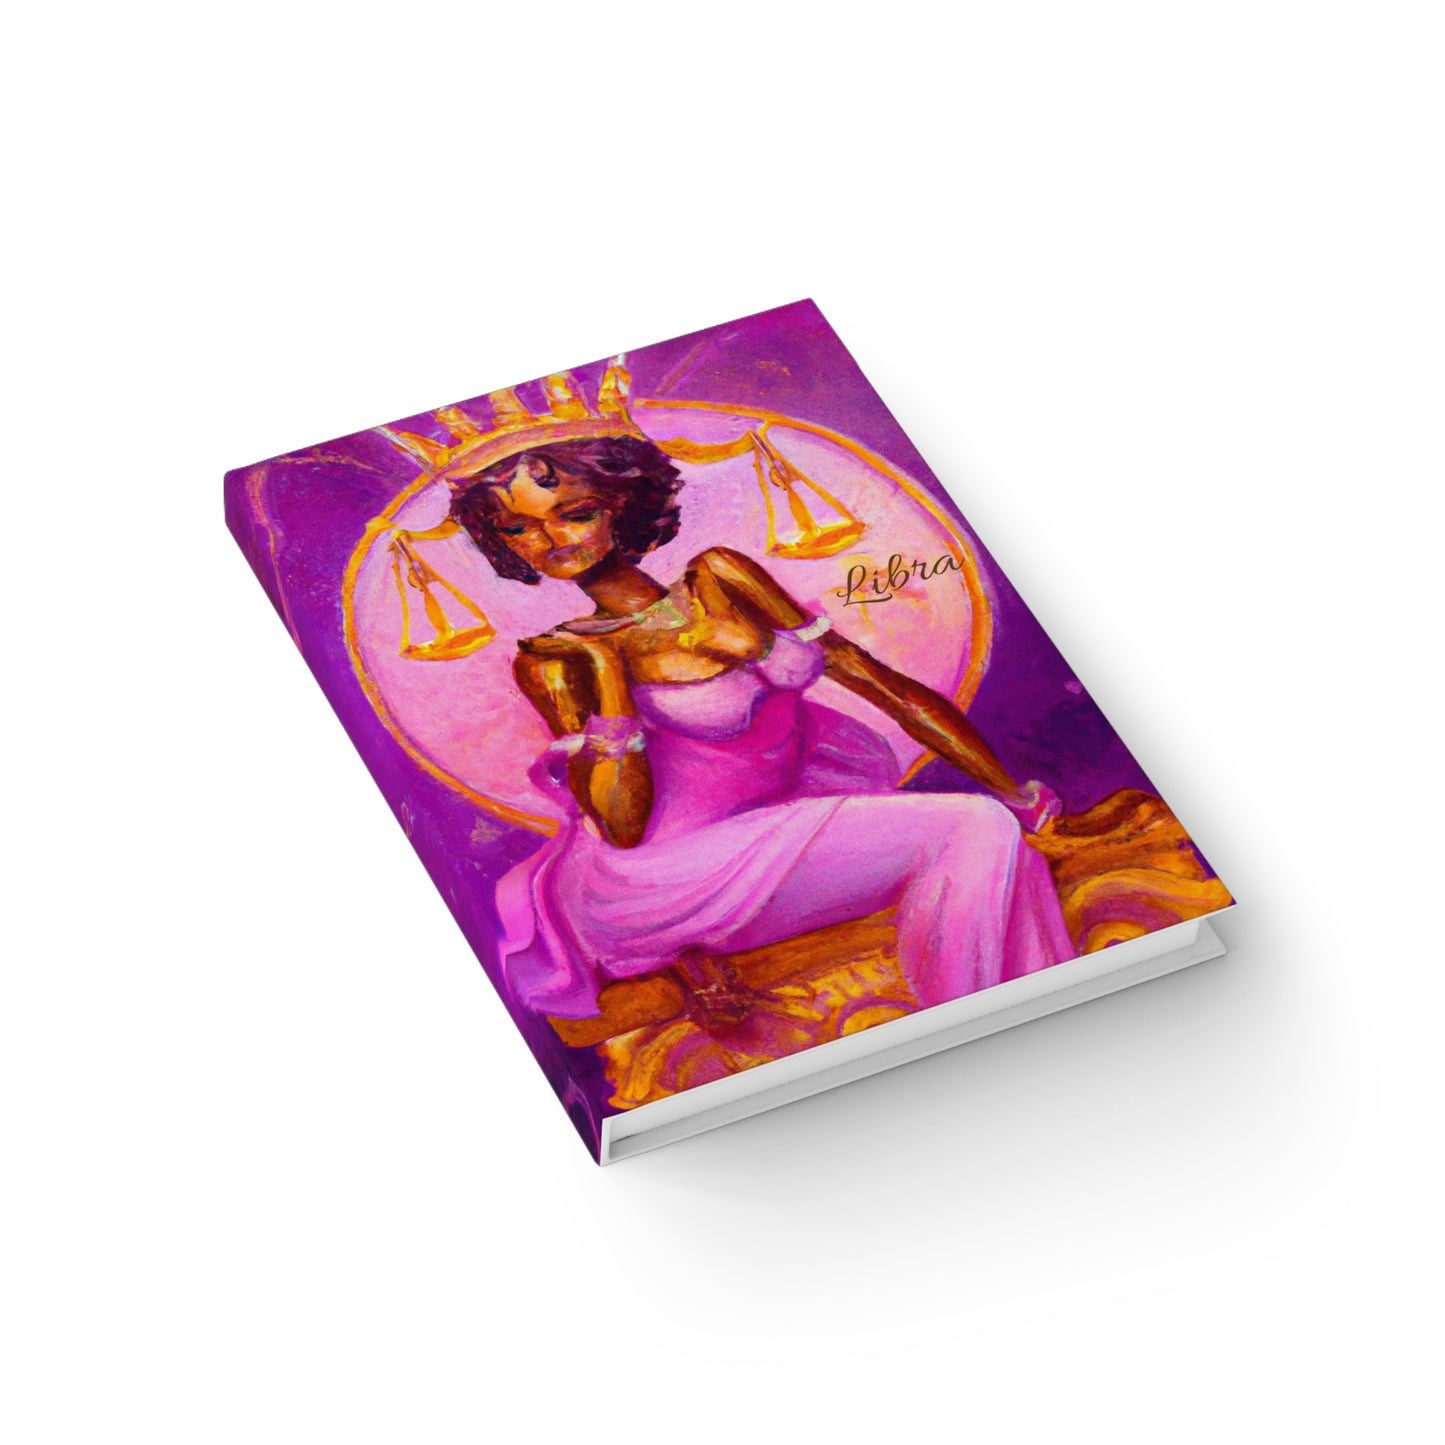 Venus Libra Hardcover Journal - Ruled Line